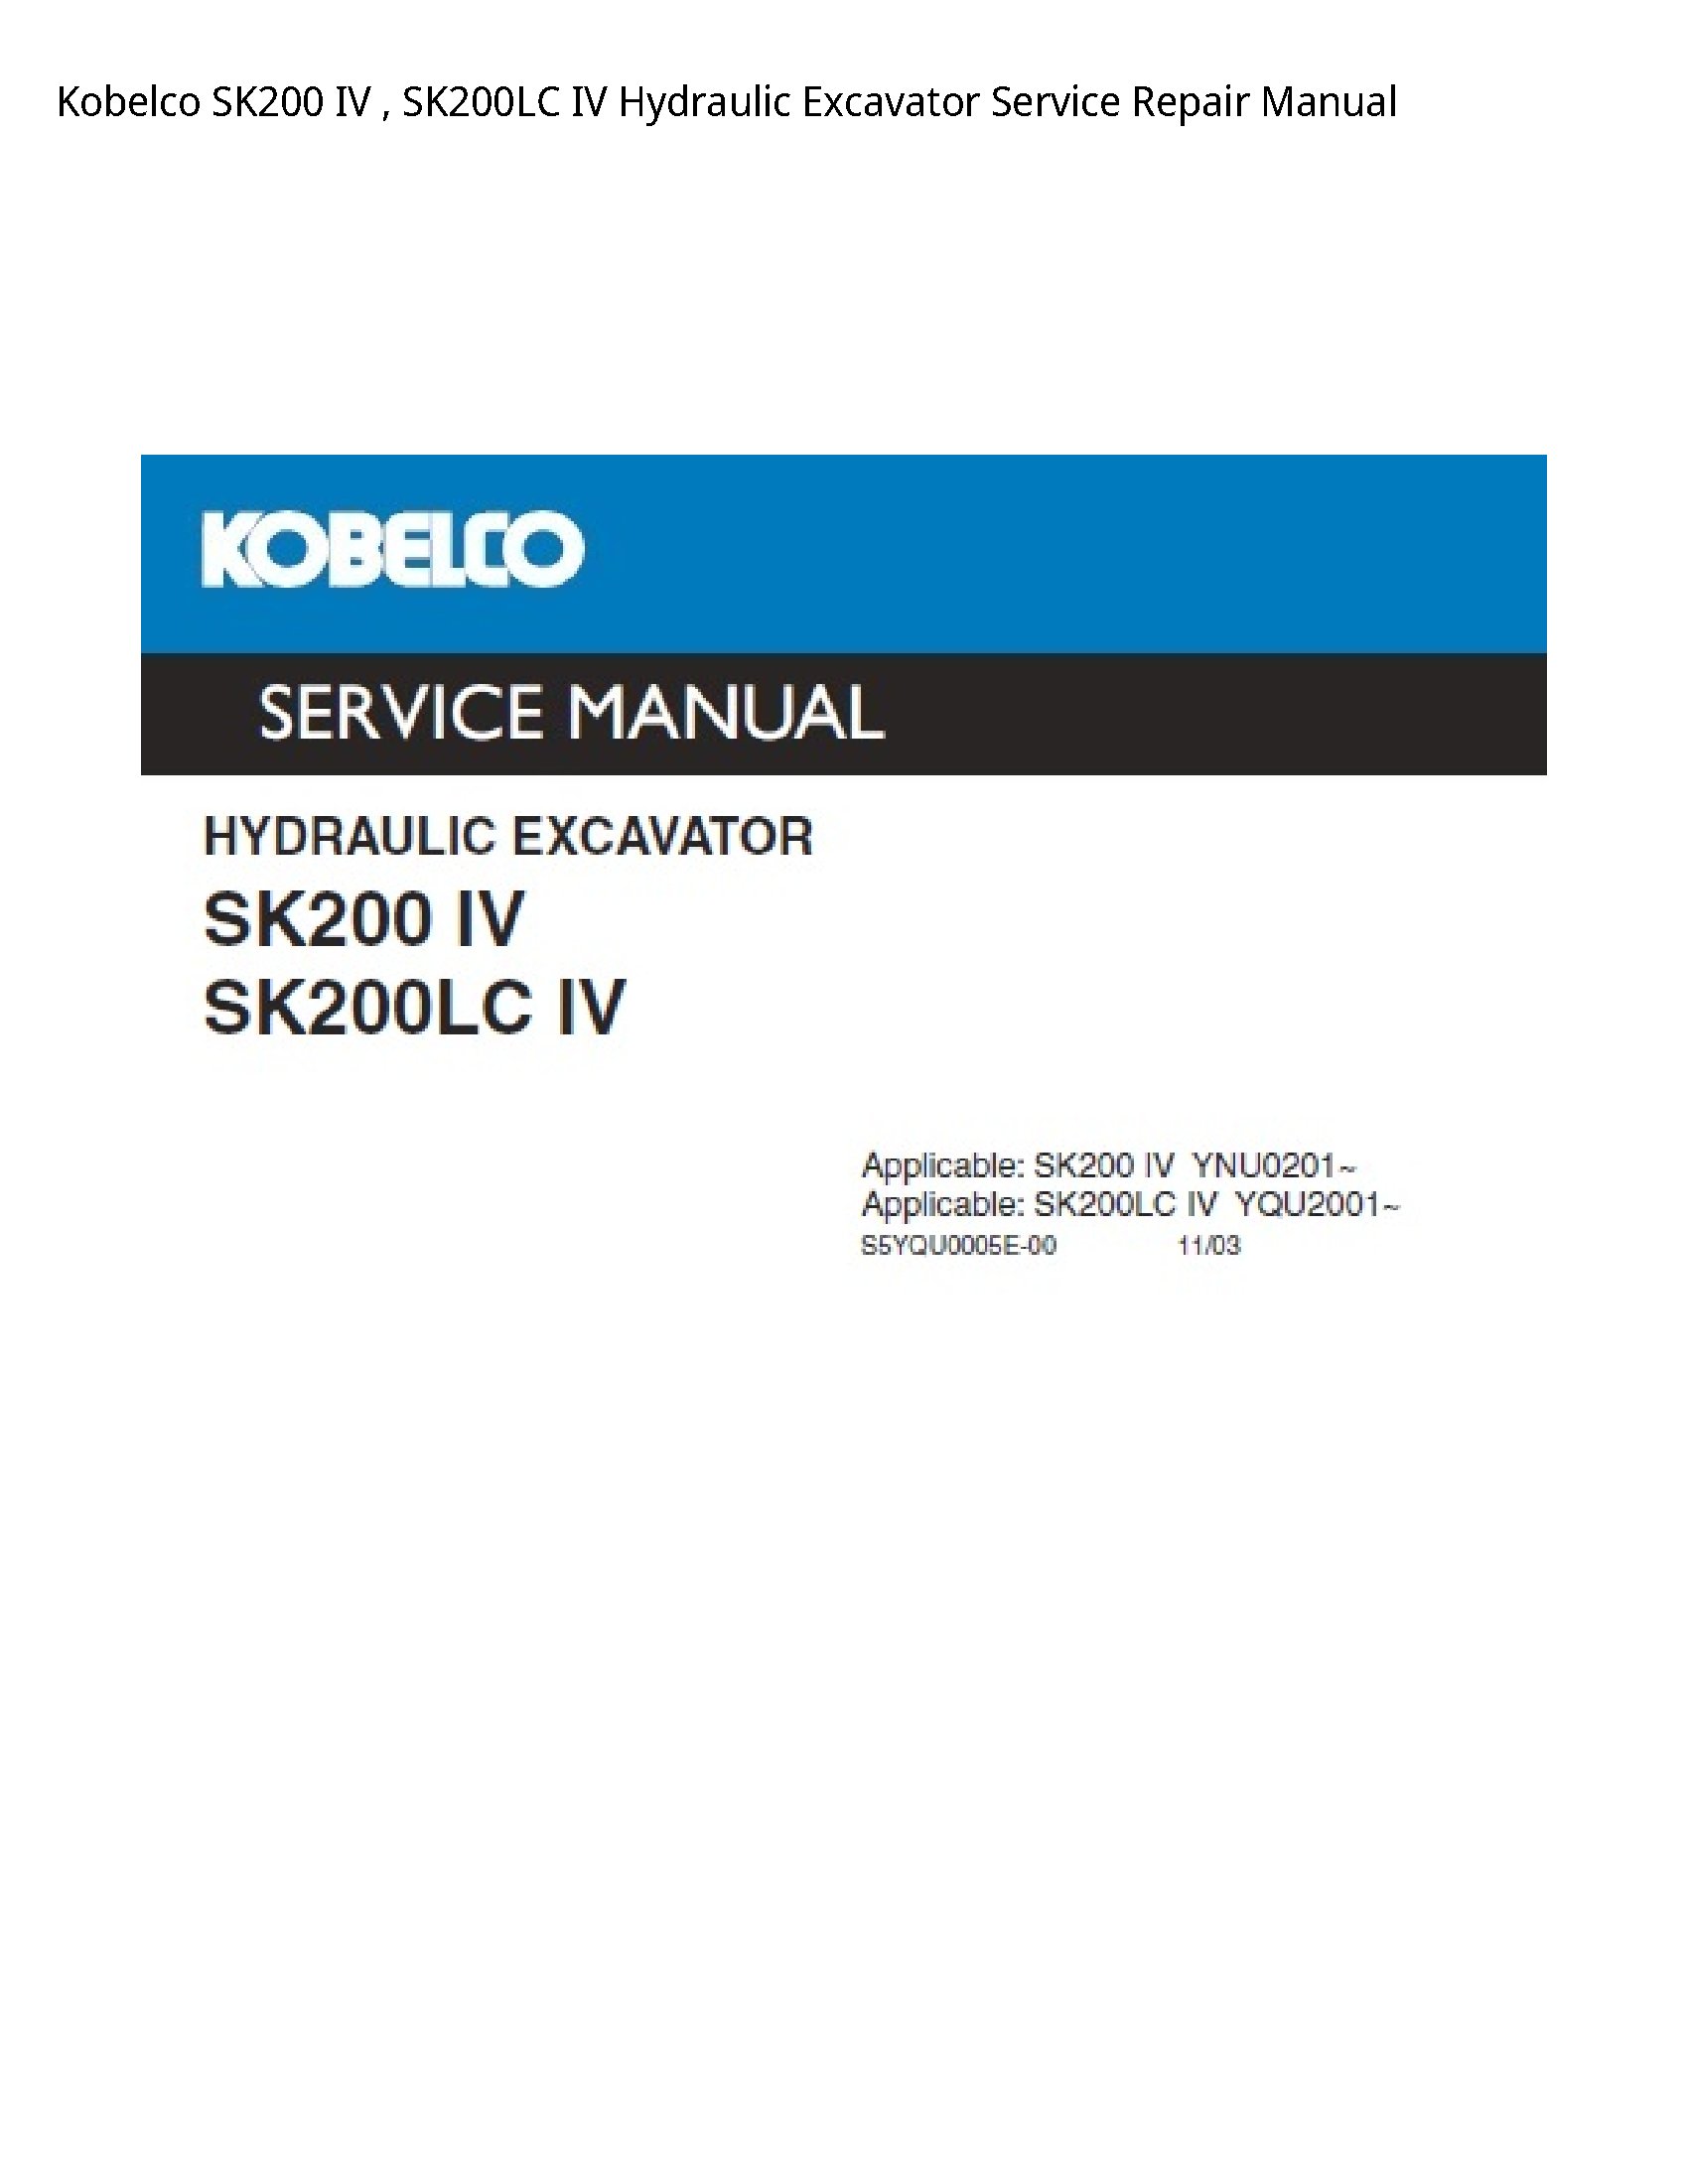 Kobelco SK200 IV IV Hydraulic Excavator manual